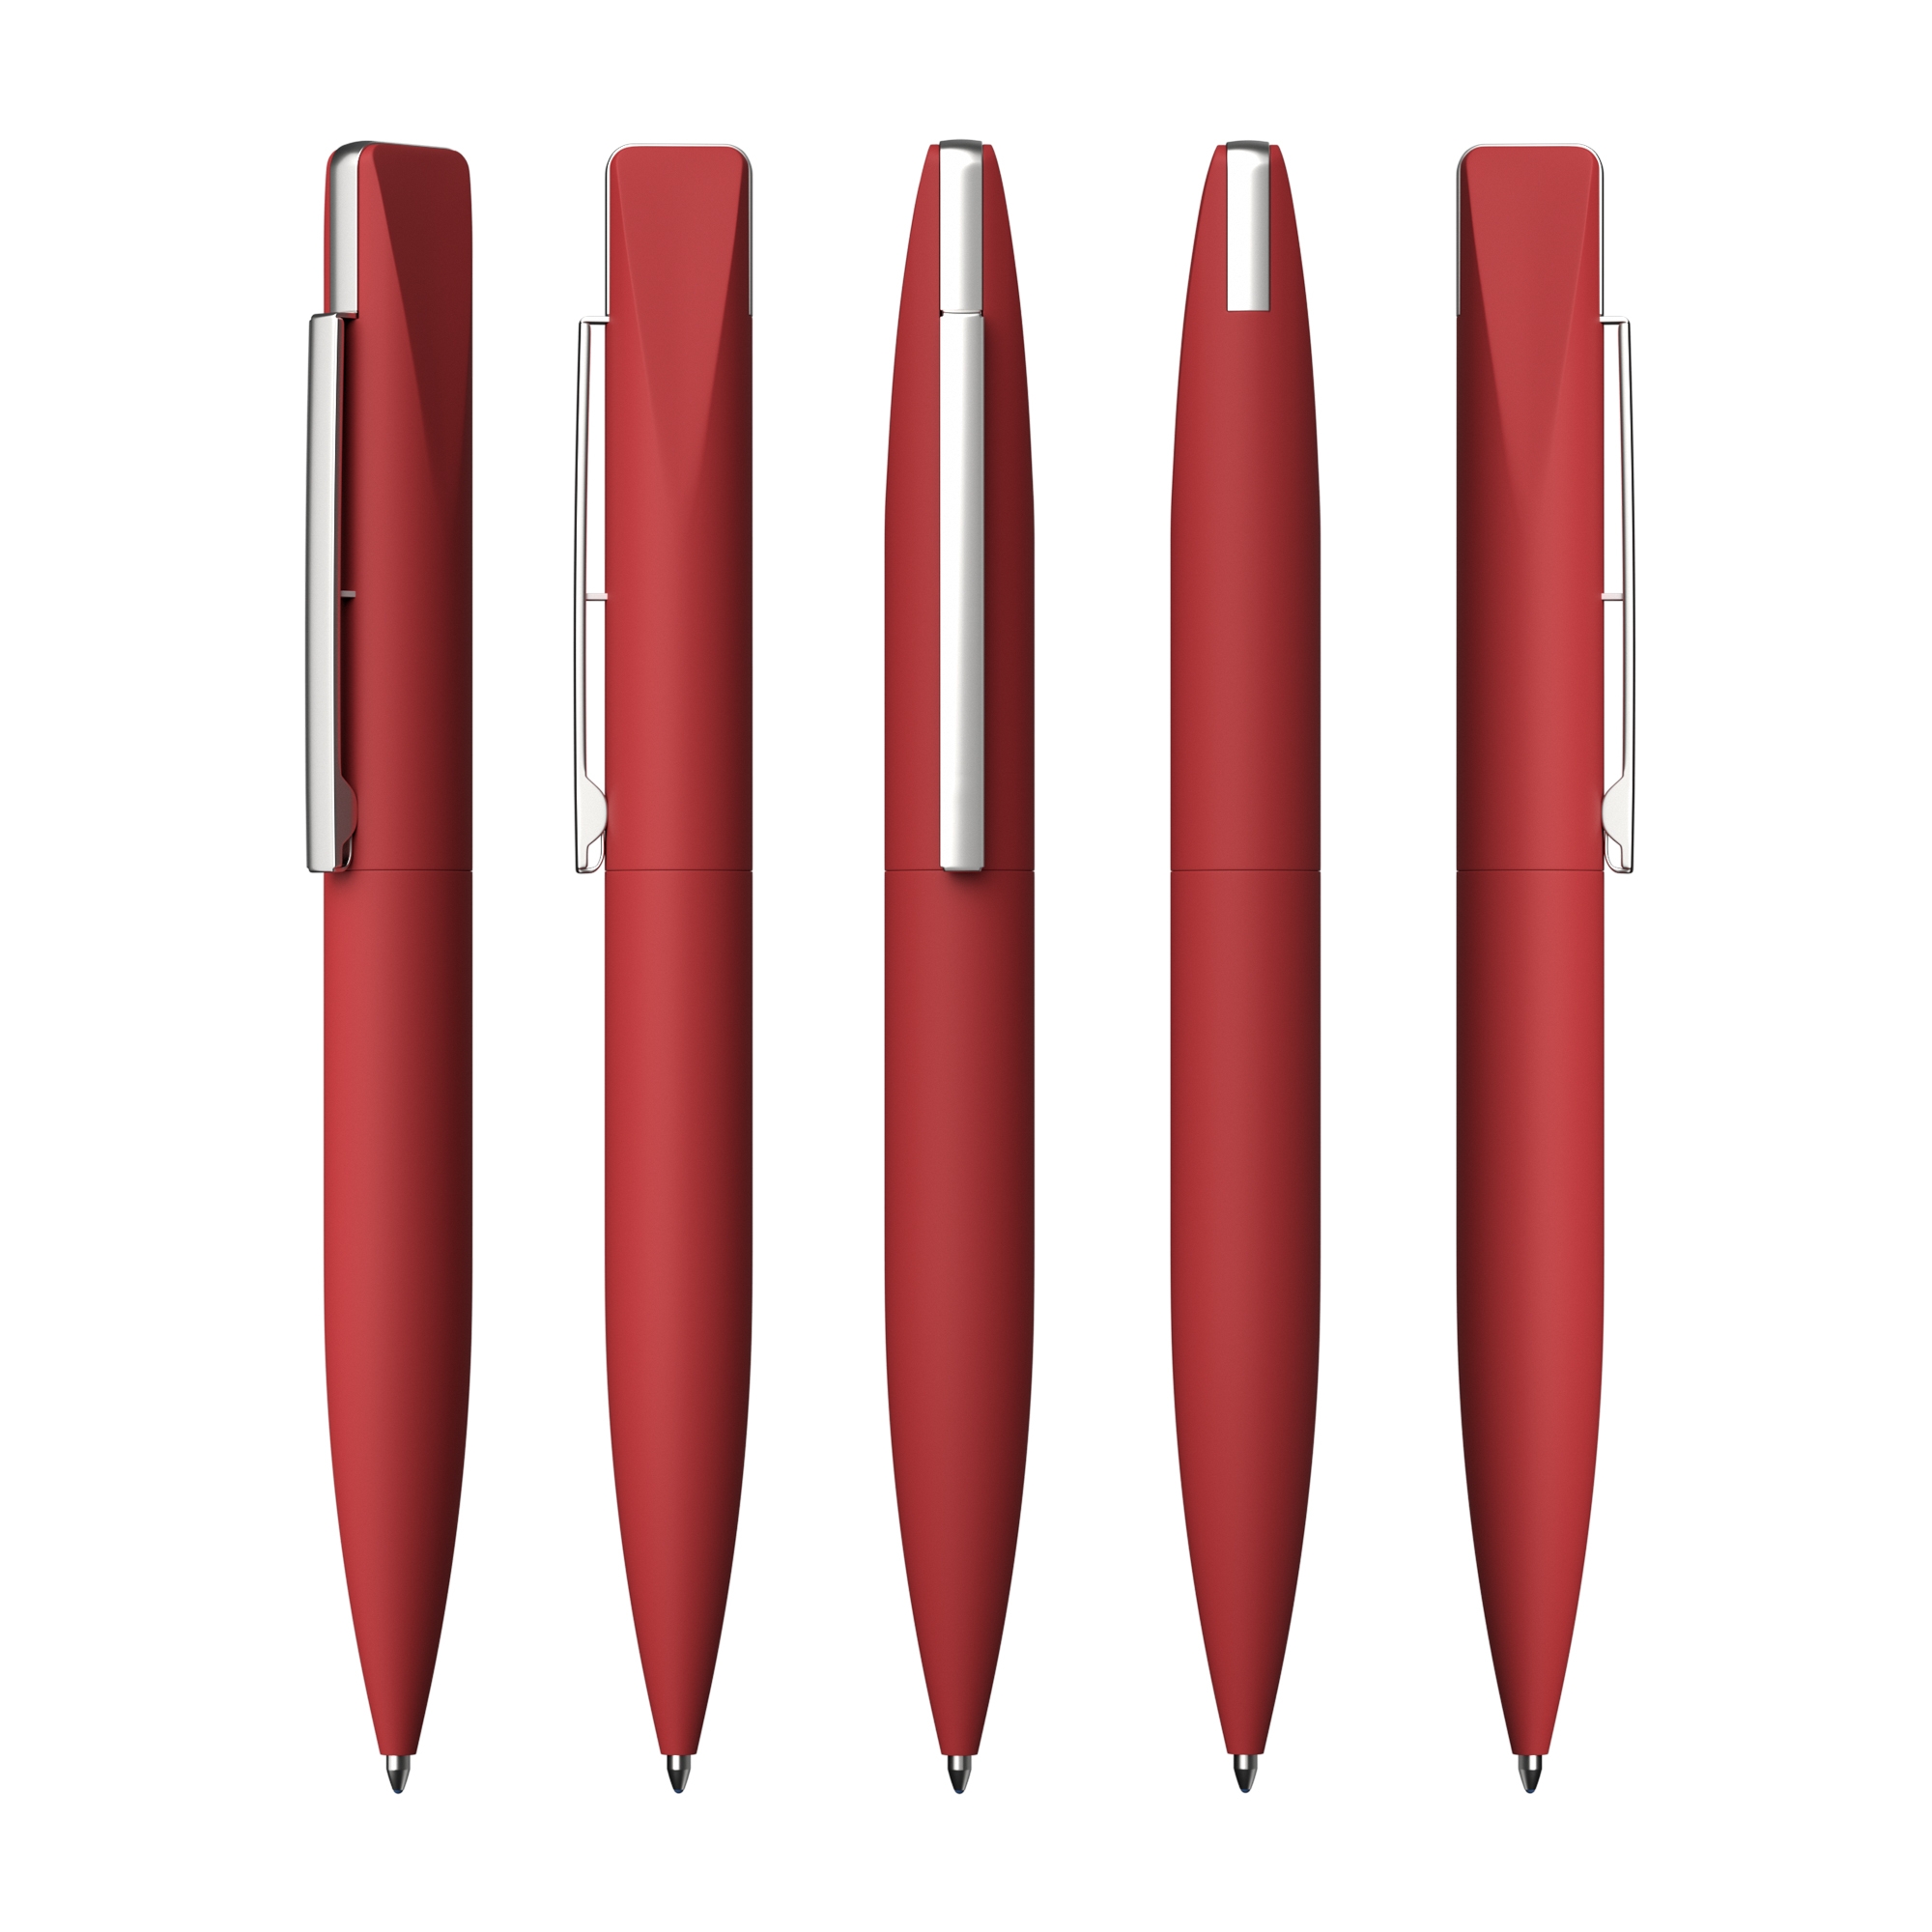 Ручка шариковая "Callisto" с флеш-картой 32Gb, покрытие soft touch, красный, металл/пластик/soft touch